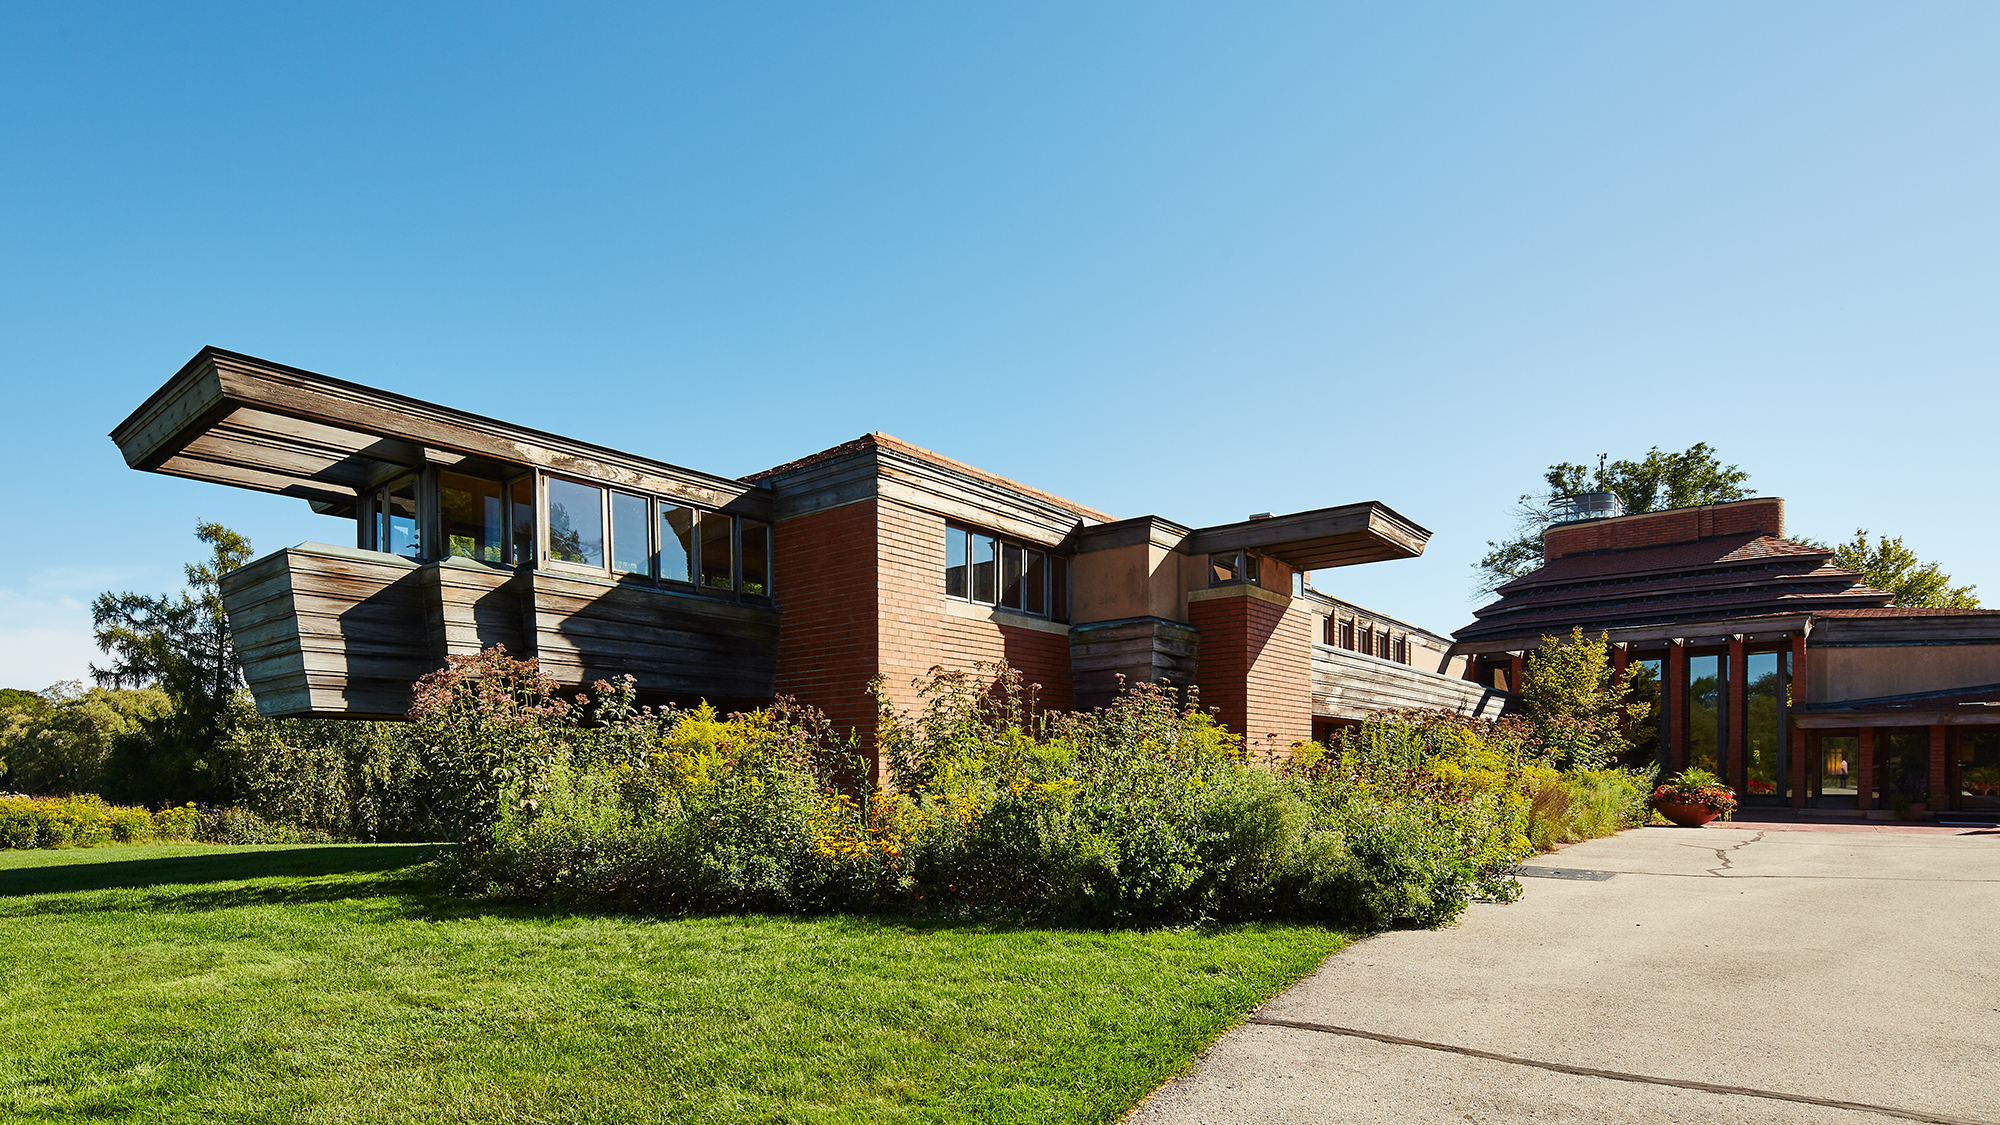 Frank Lloyd Wright 设计的水平线和自然色木建筑